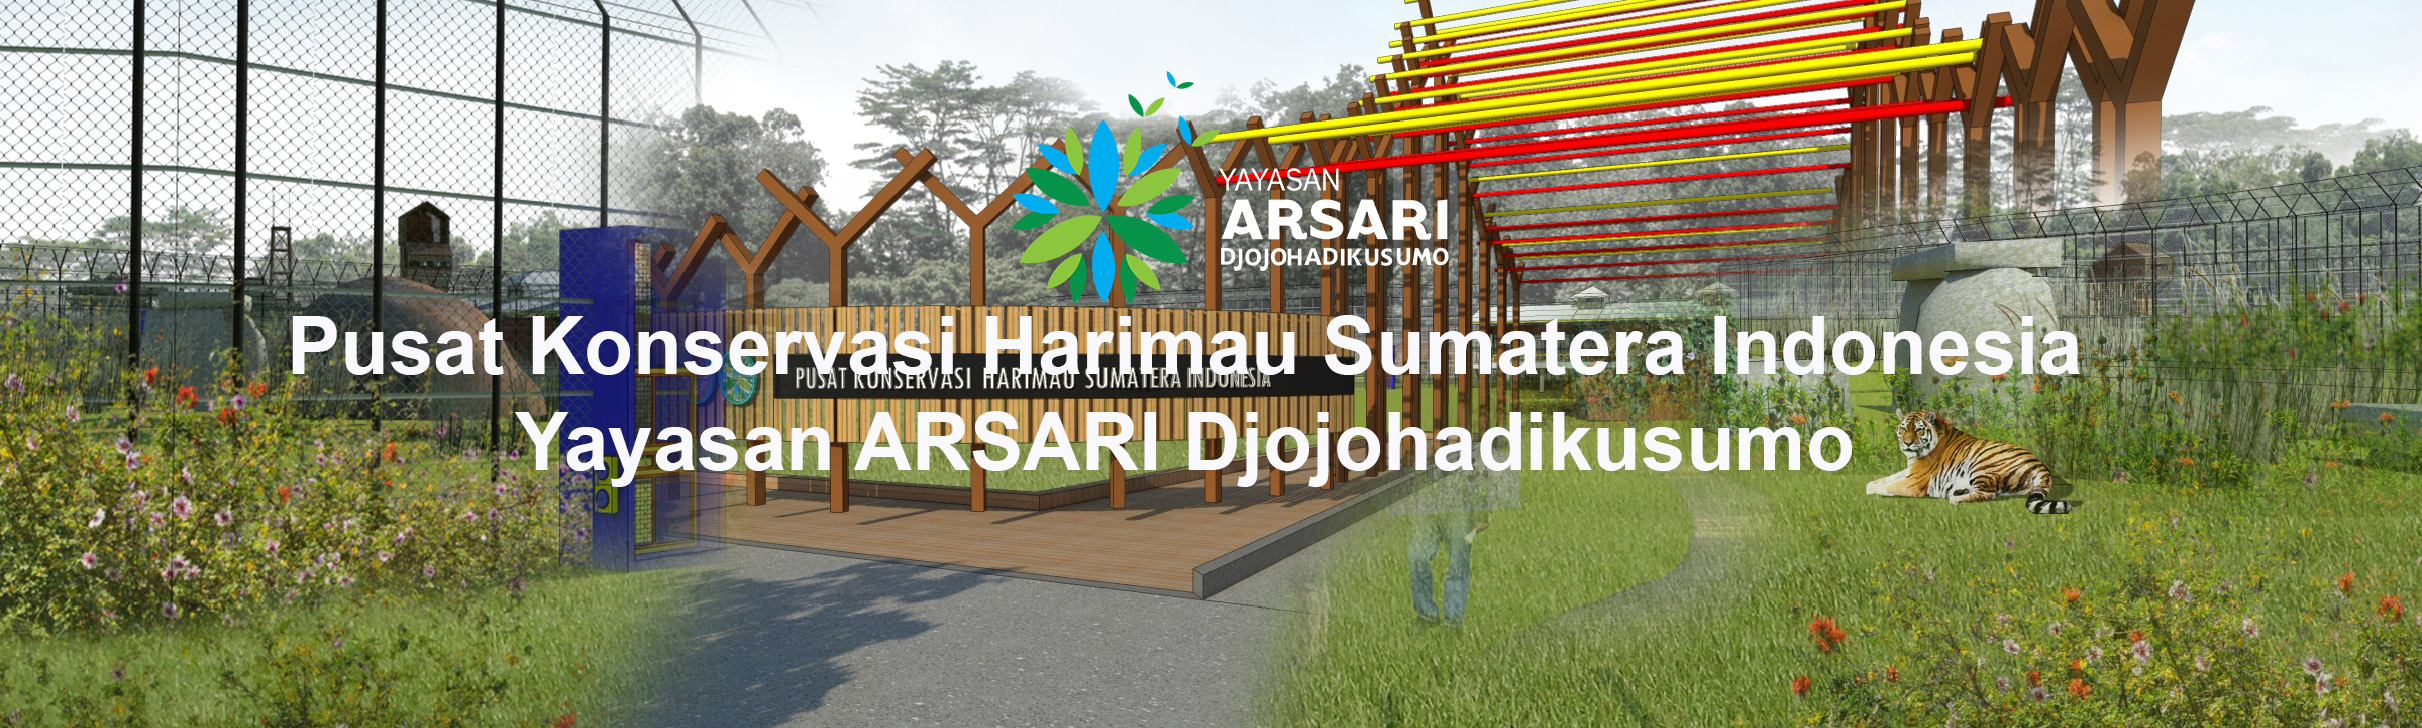 Siteplan – Indonesian Sumatran Tiger Conservation Center, Yayasan ARSARI Djojohadikusumo